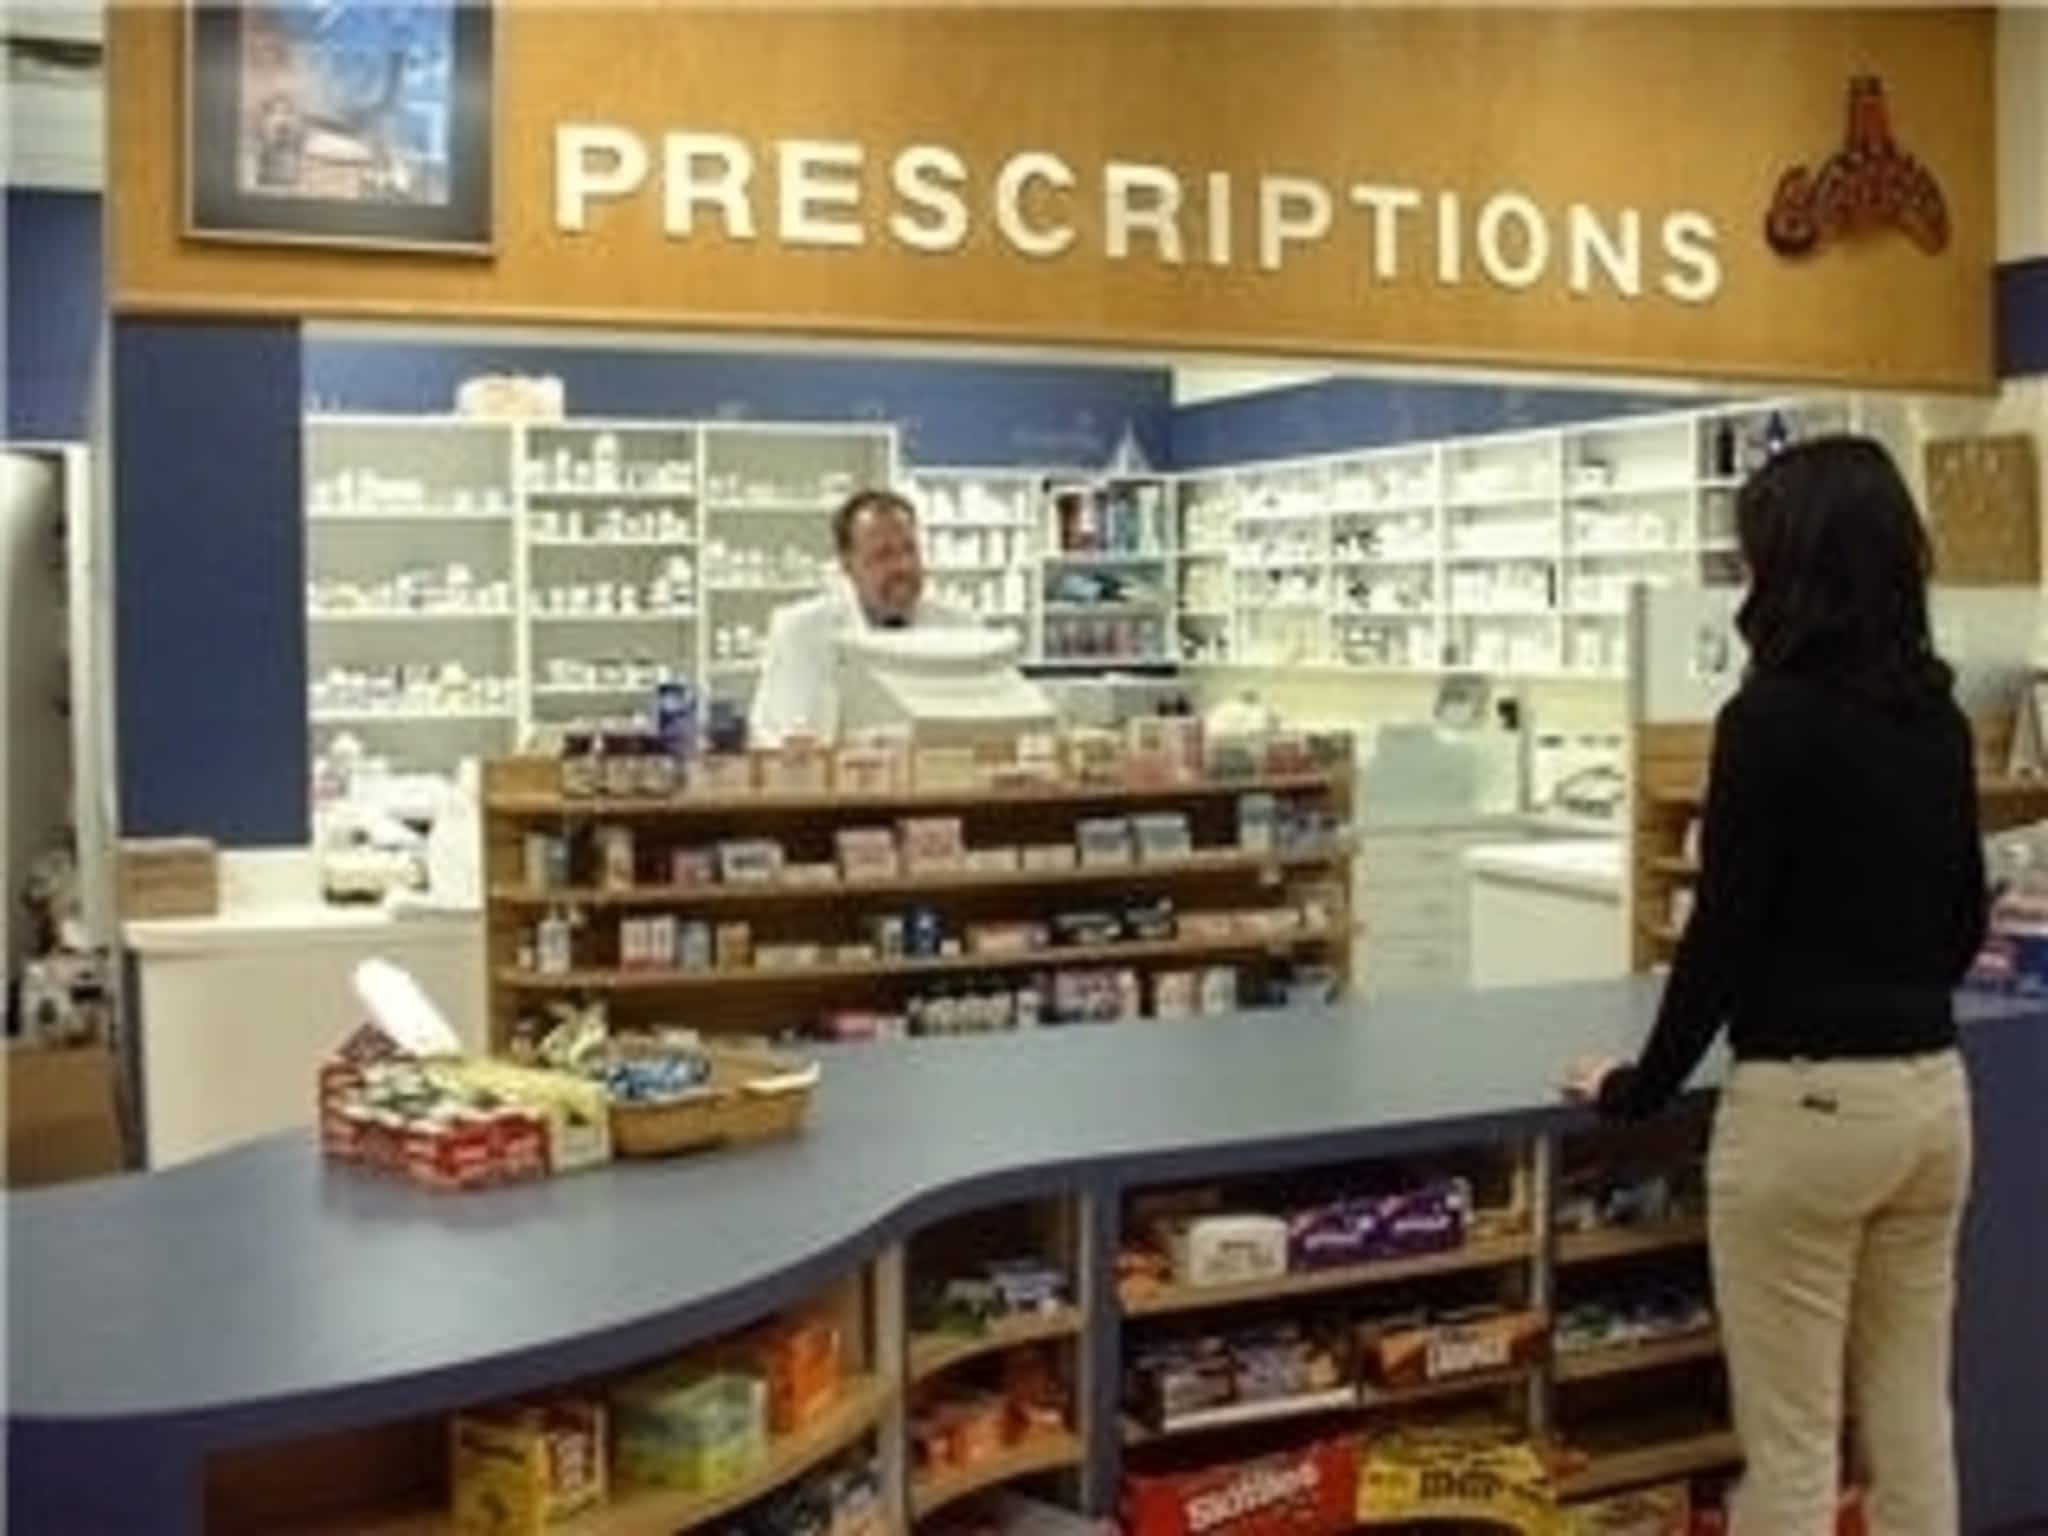 photo Macdonald's Prescriptions #3 Kitsilano